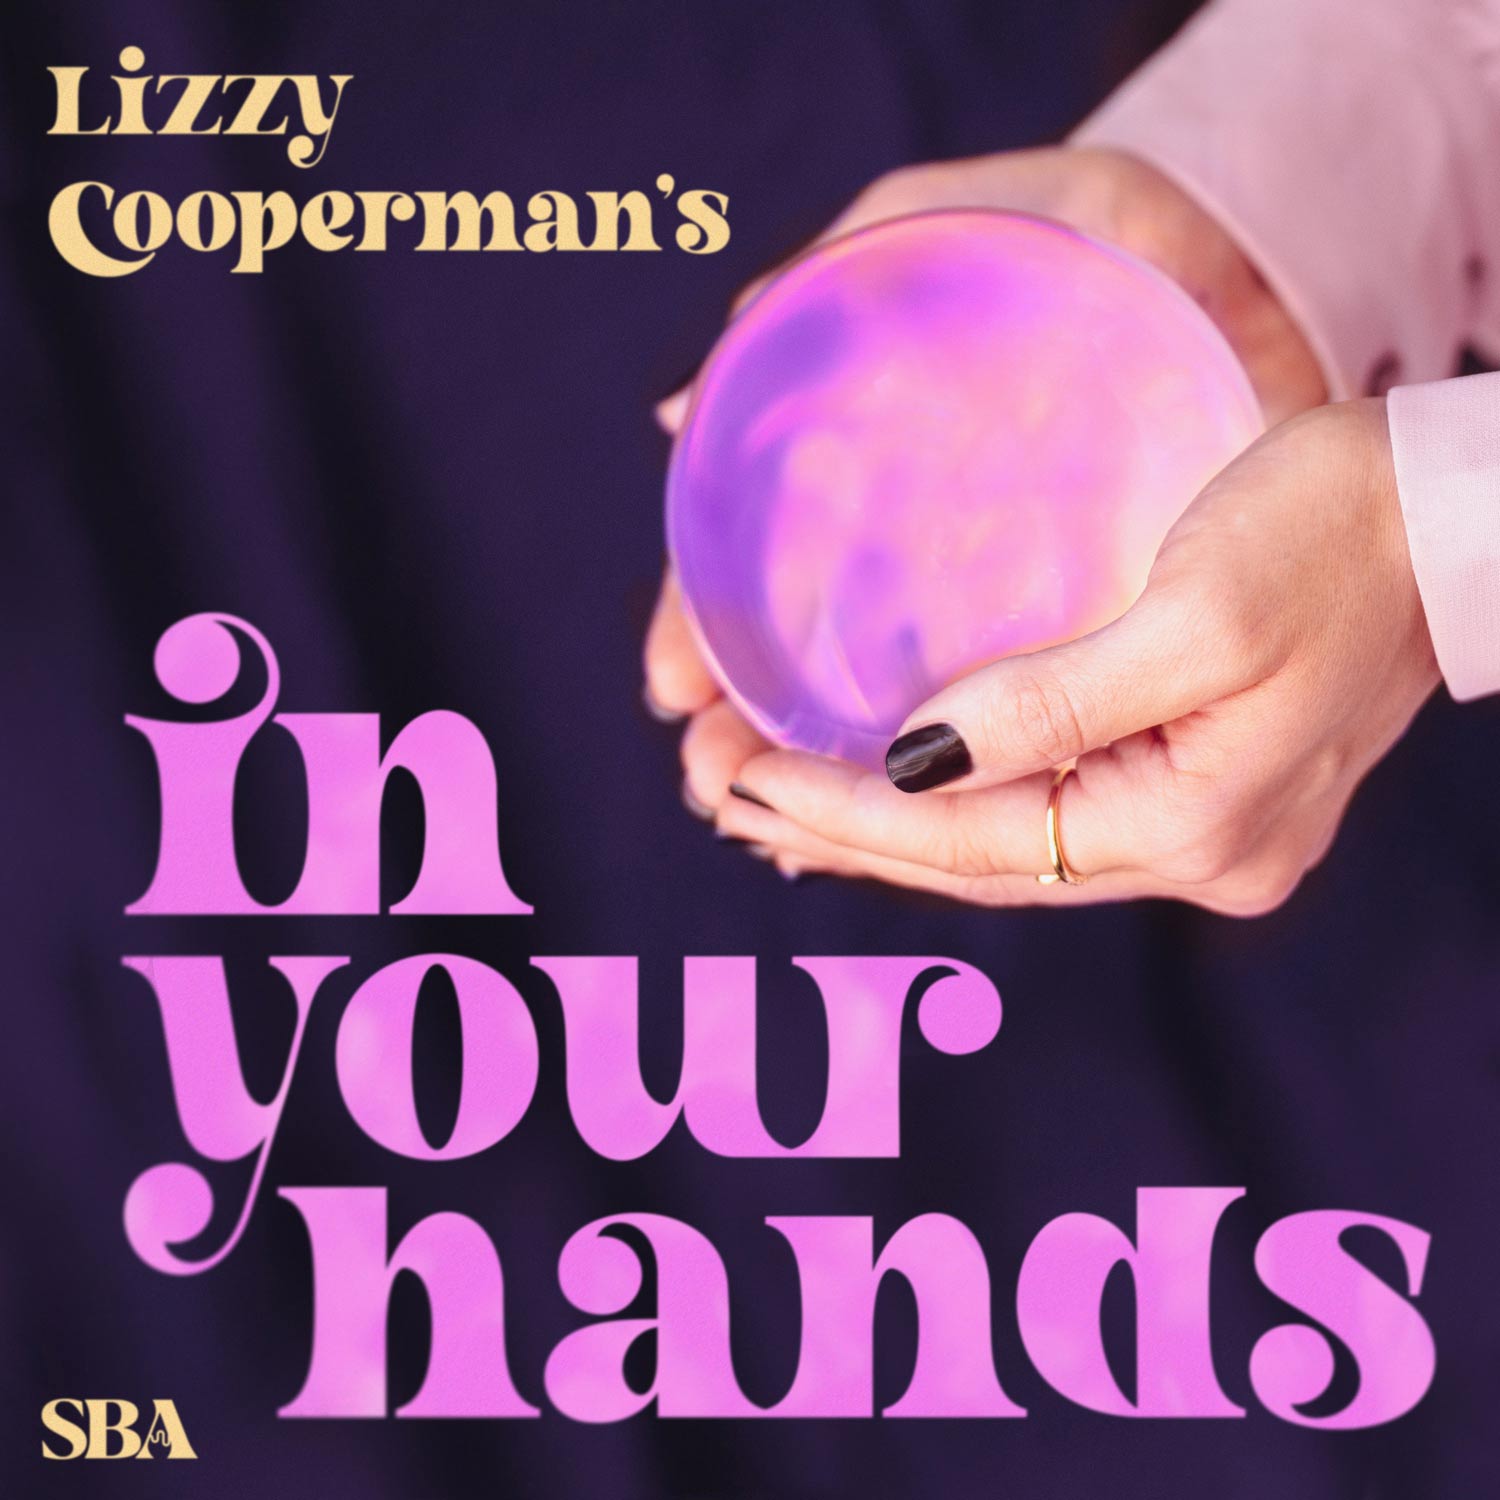 Lizzy Cooperman’s In Your Hands